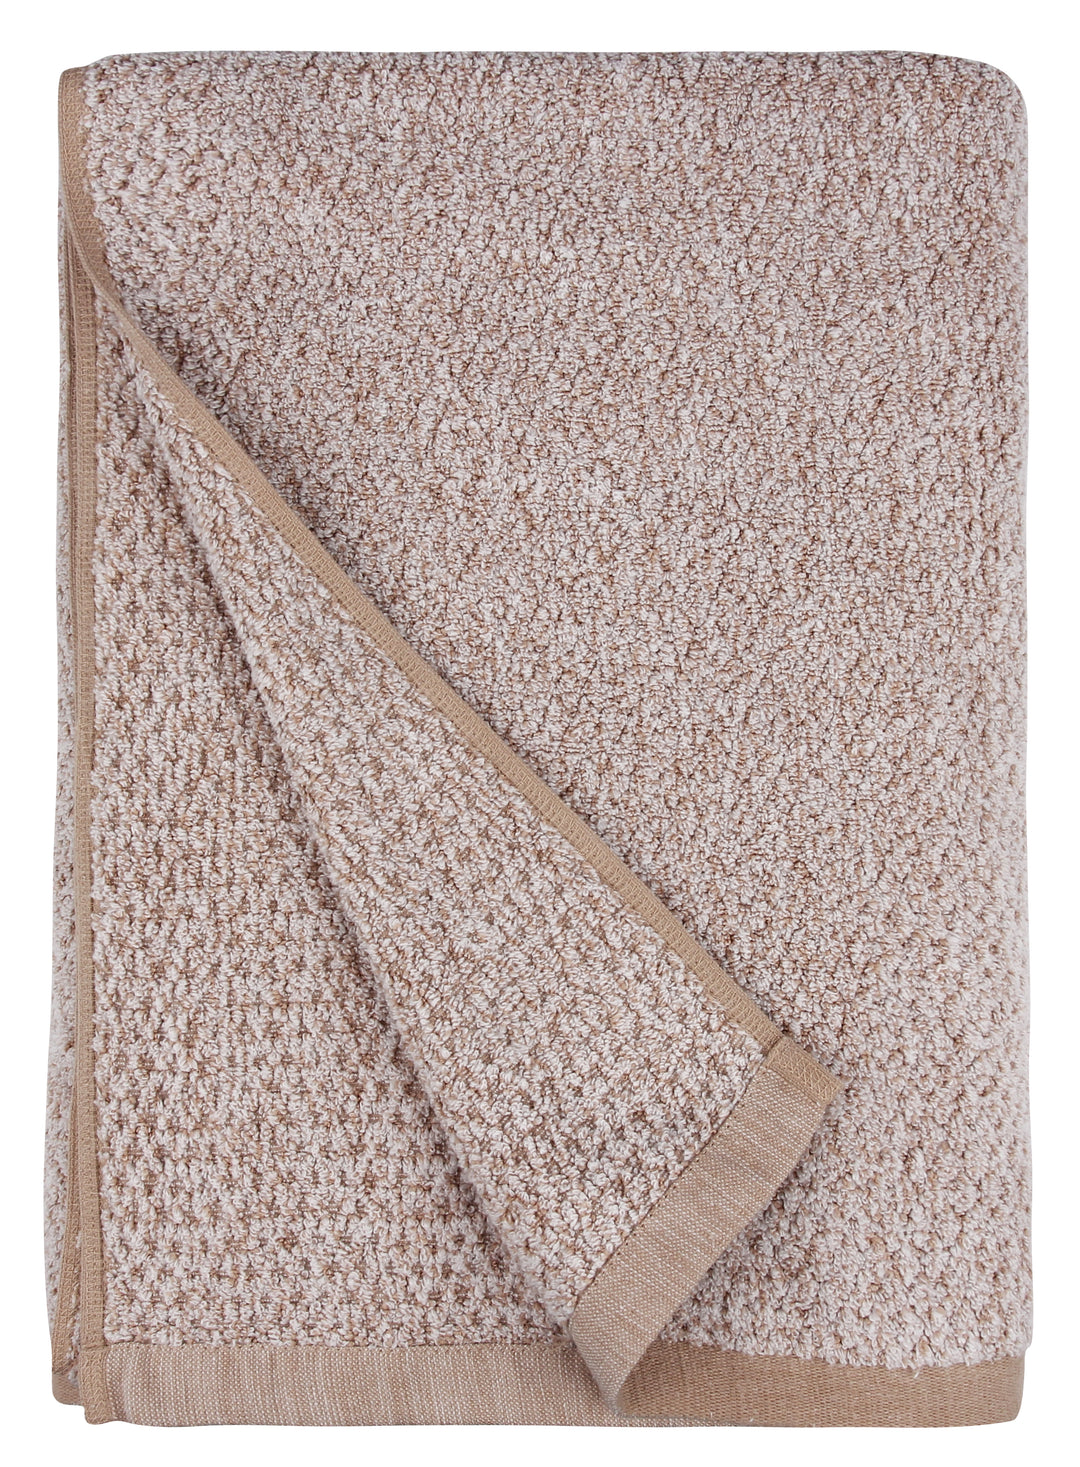 Diamond Jacquard Towels, Bath Towel - 1 Piece, Khaki (Light Brown)